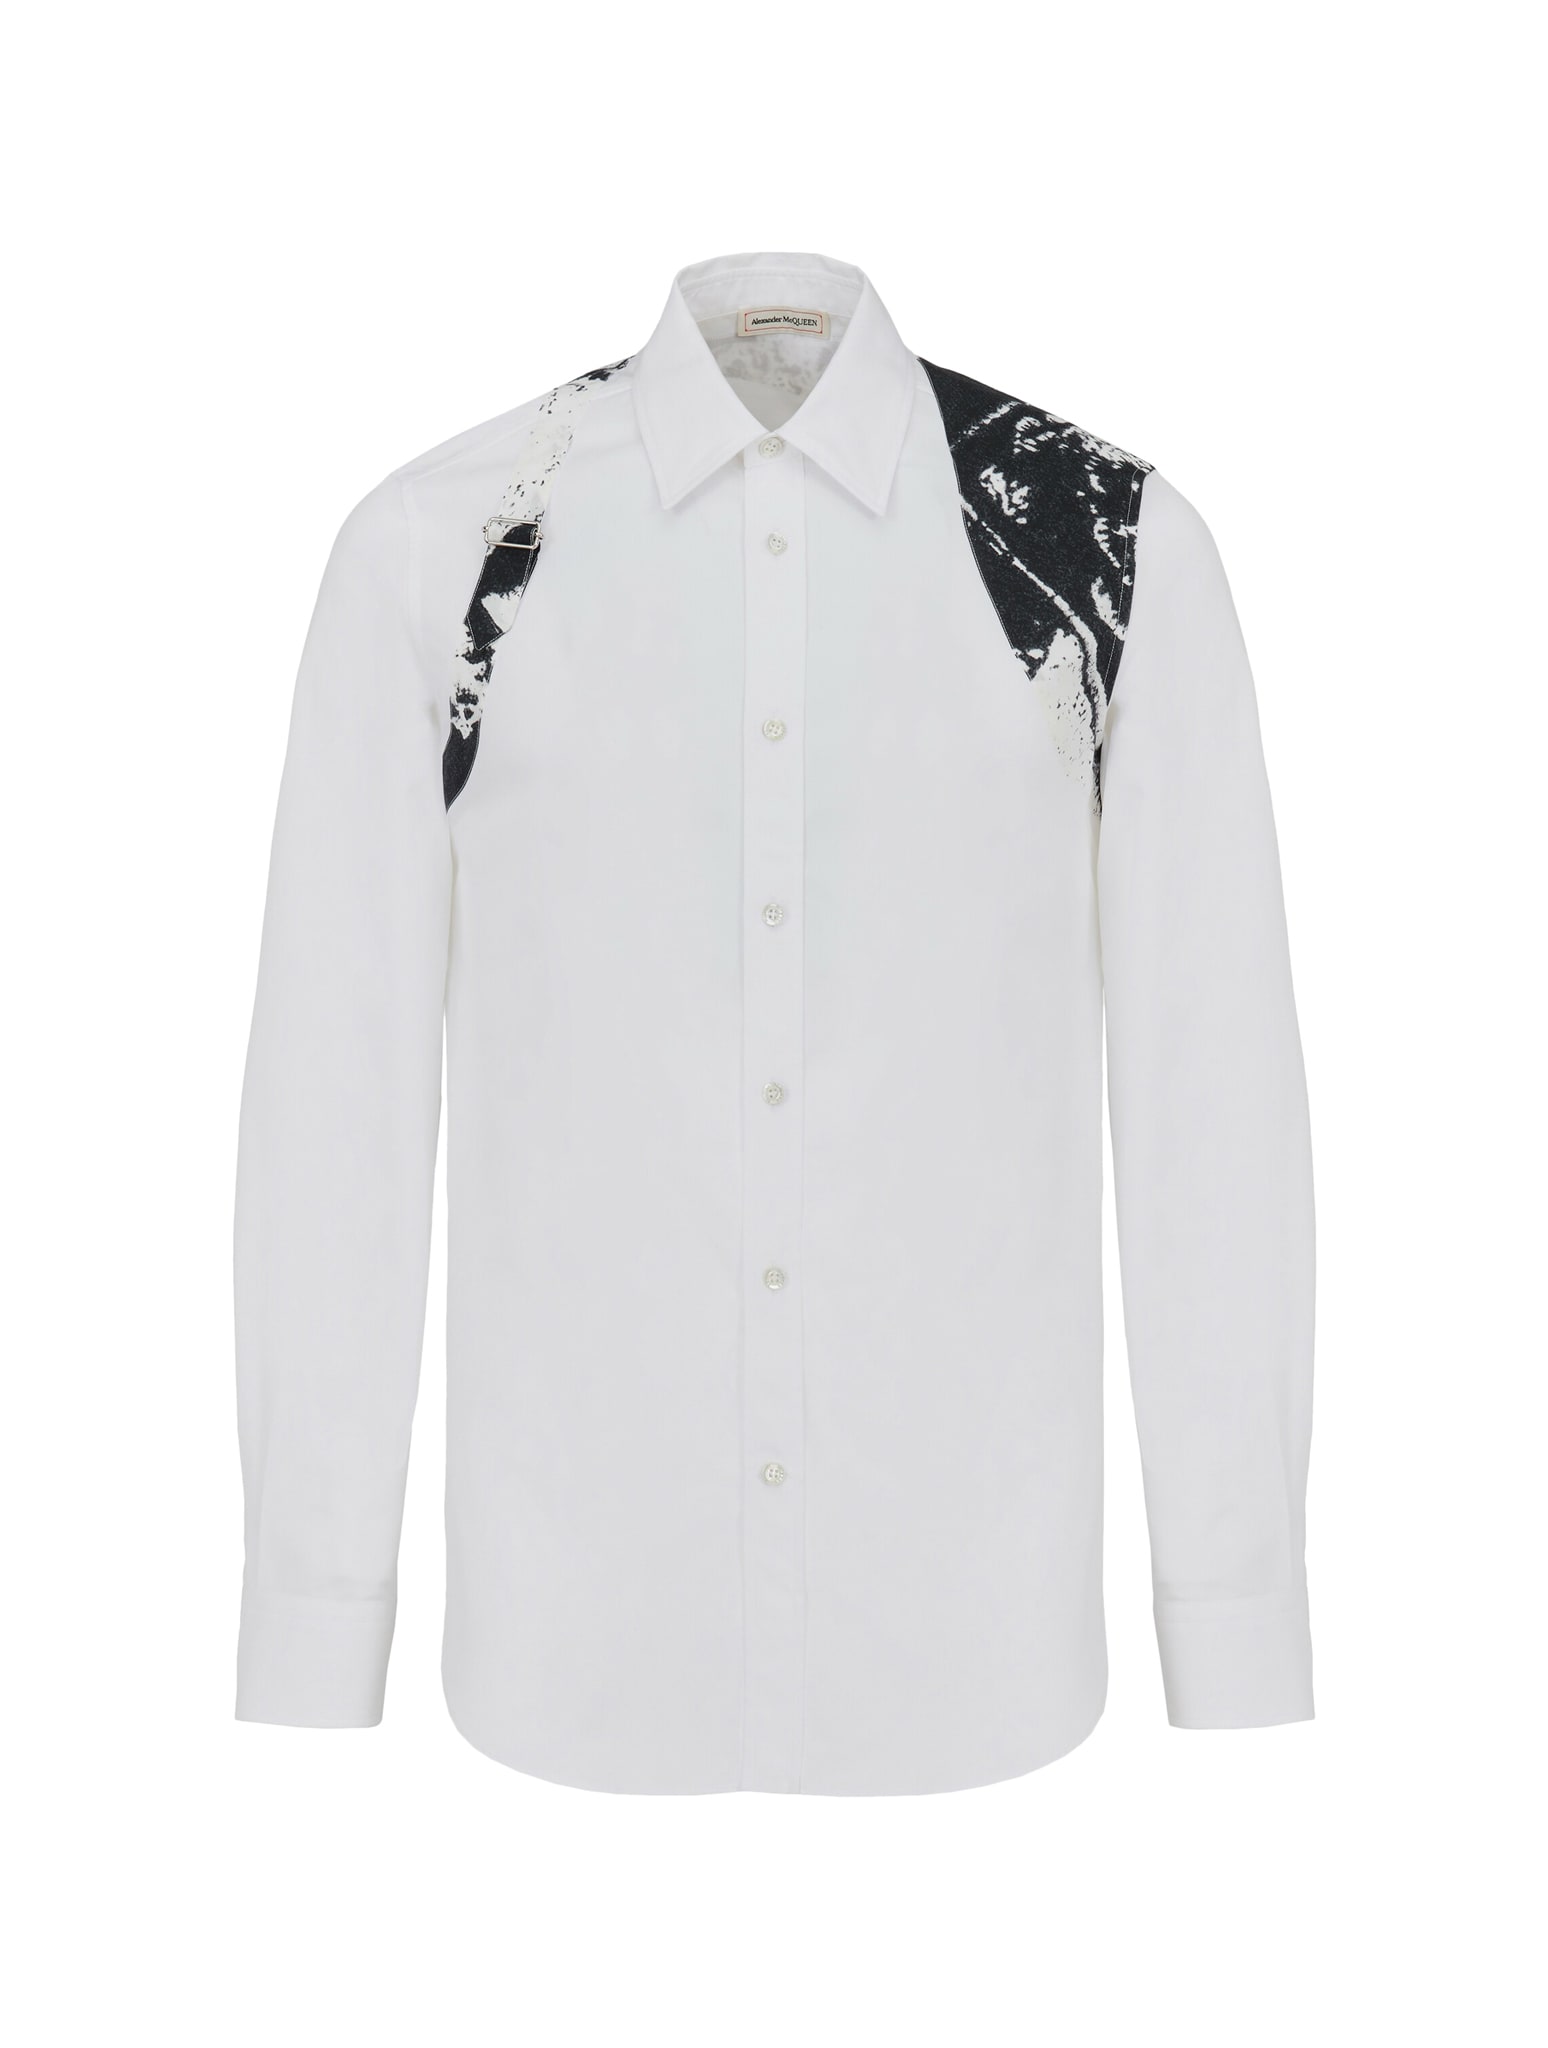 Alexander Mcqueen Printed Hrnss Shirt In Optical White